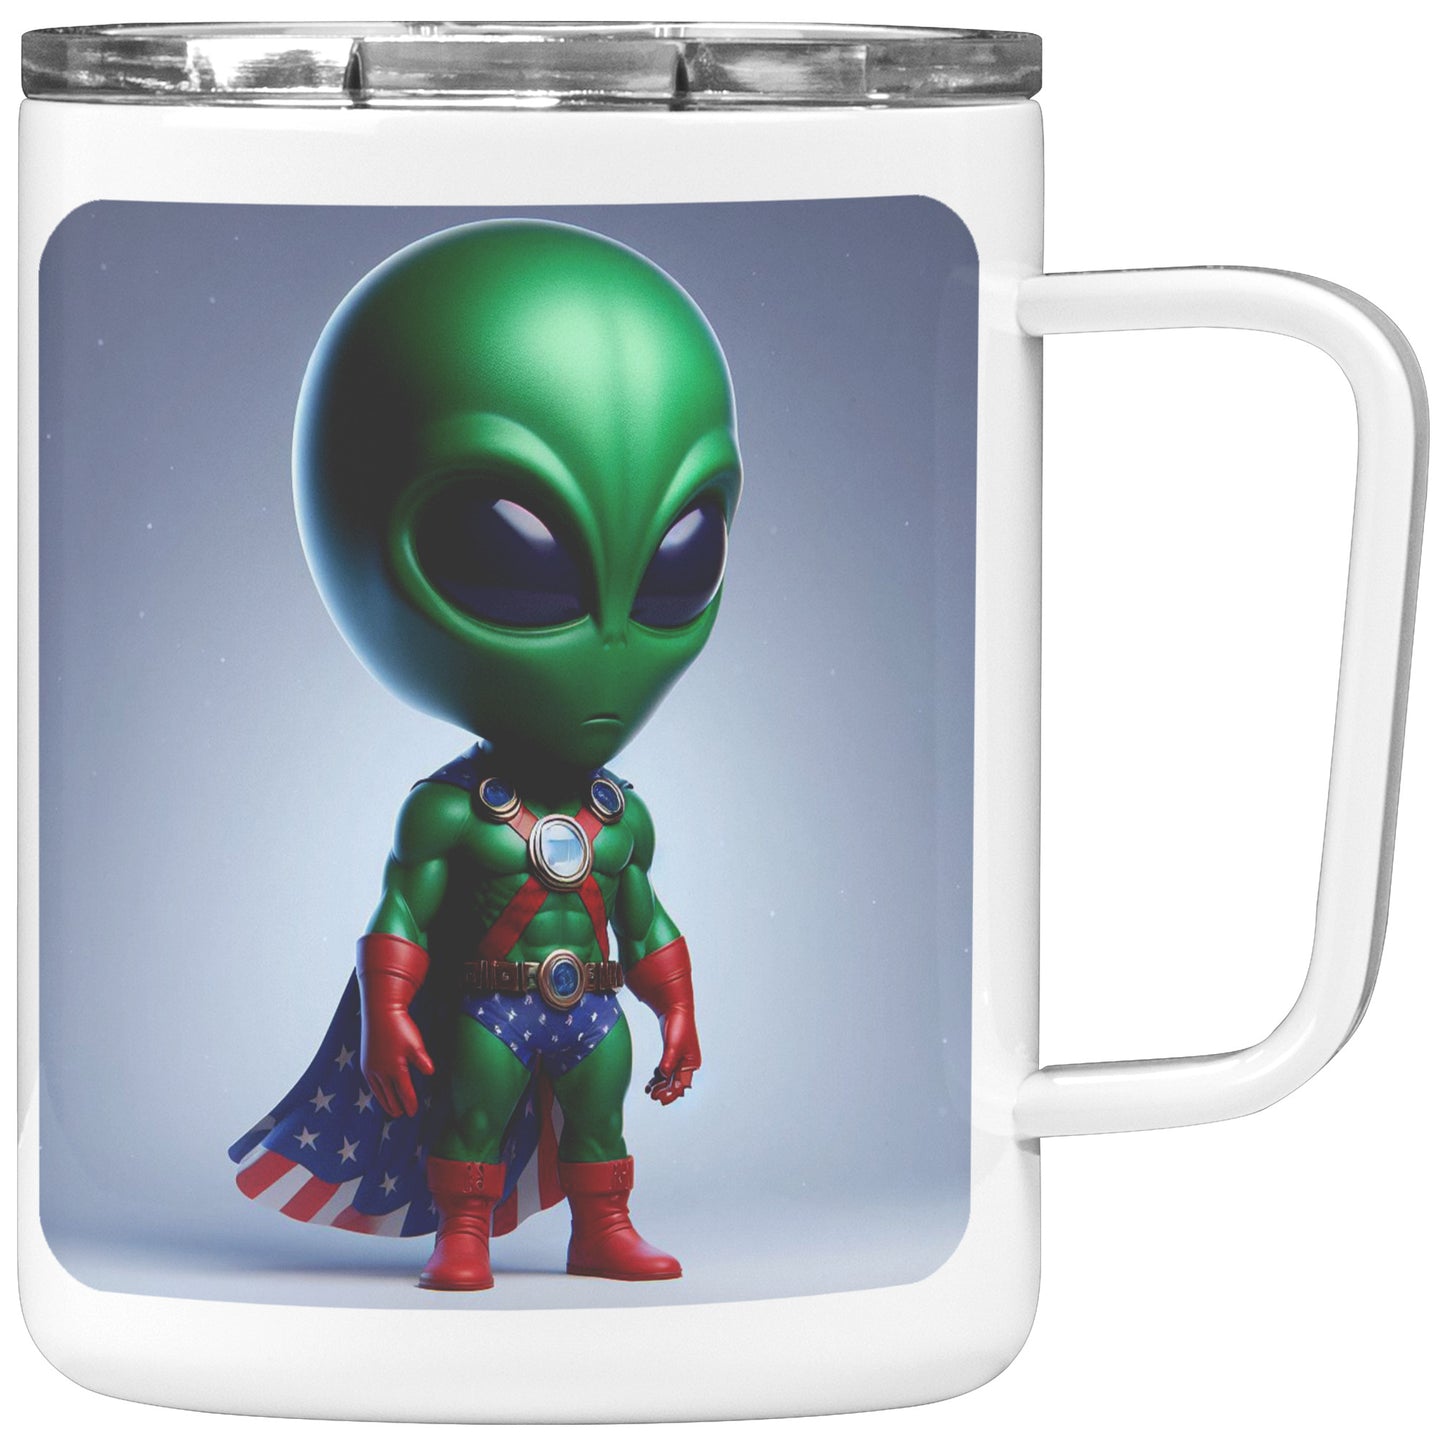 Martian Alien Caricature - Coffee Mug #4